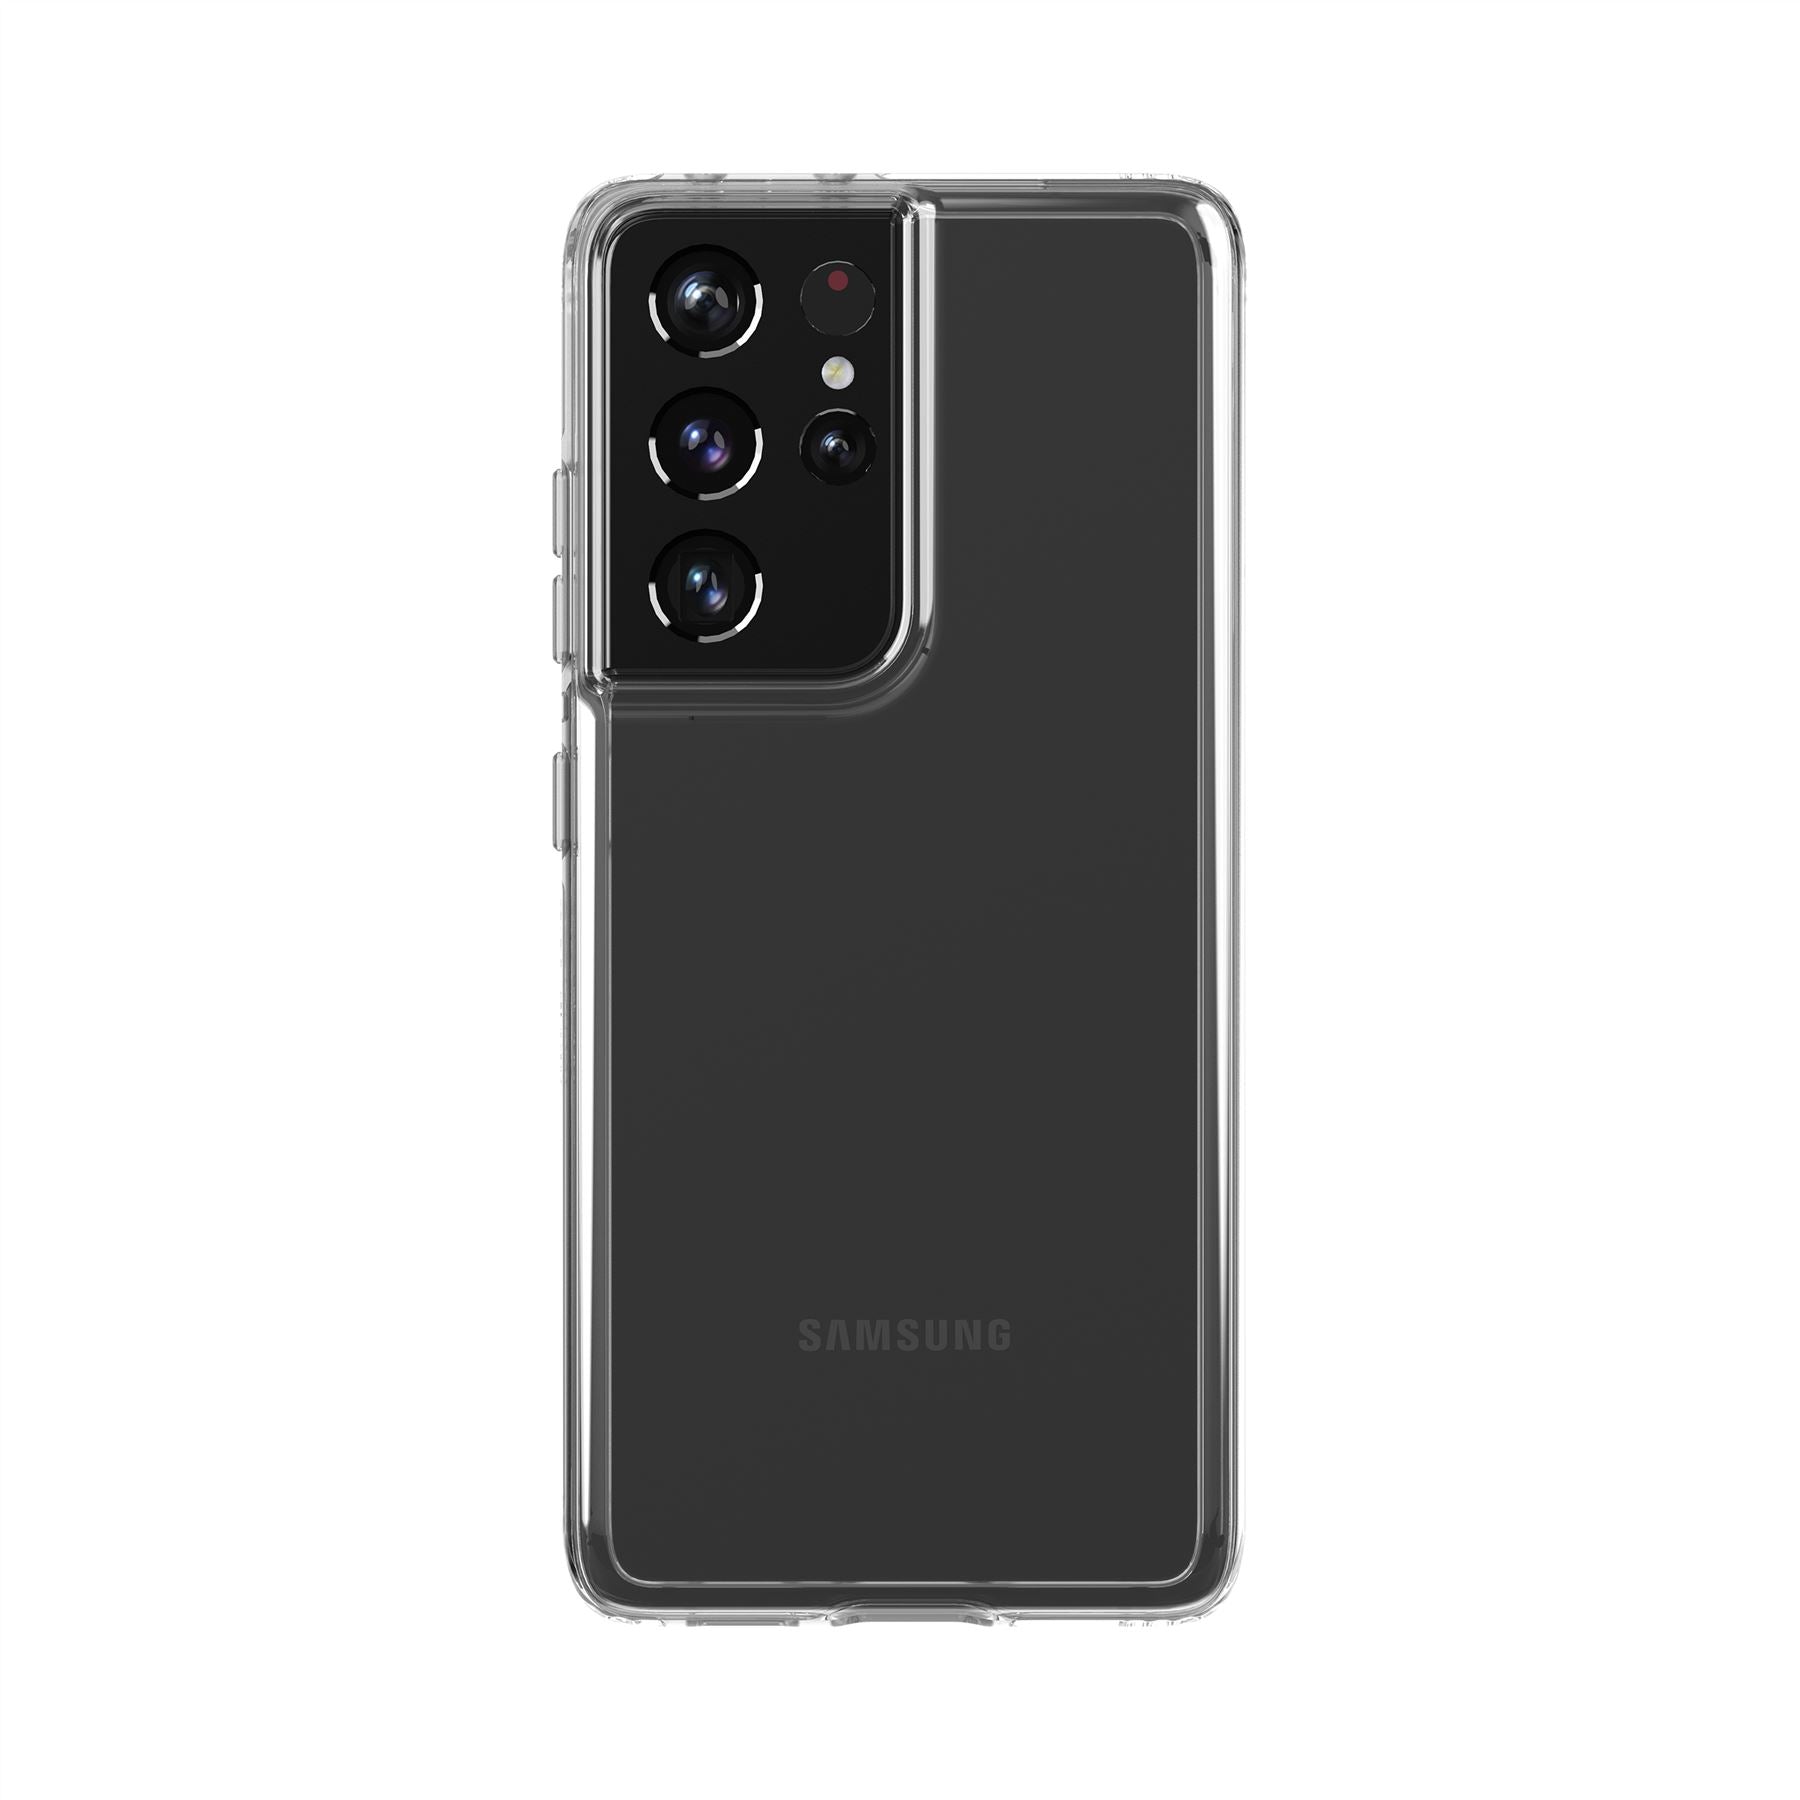 Samsung Galaxy S21 Ultra Smartphone